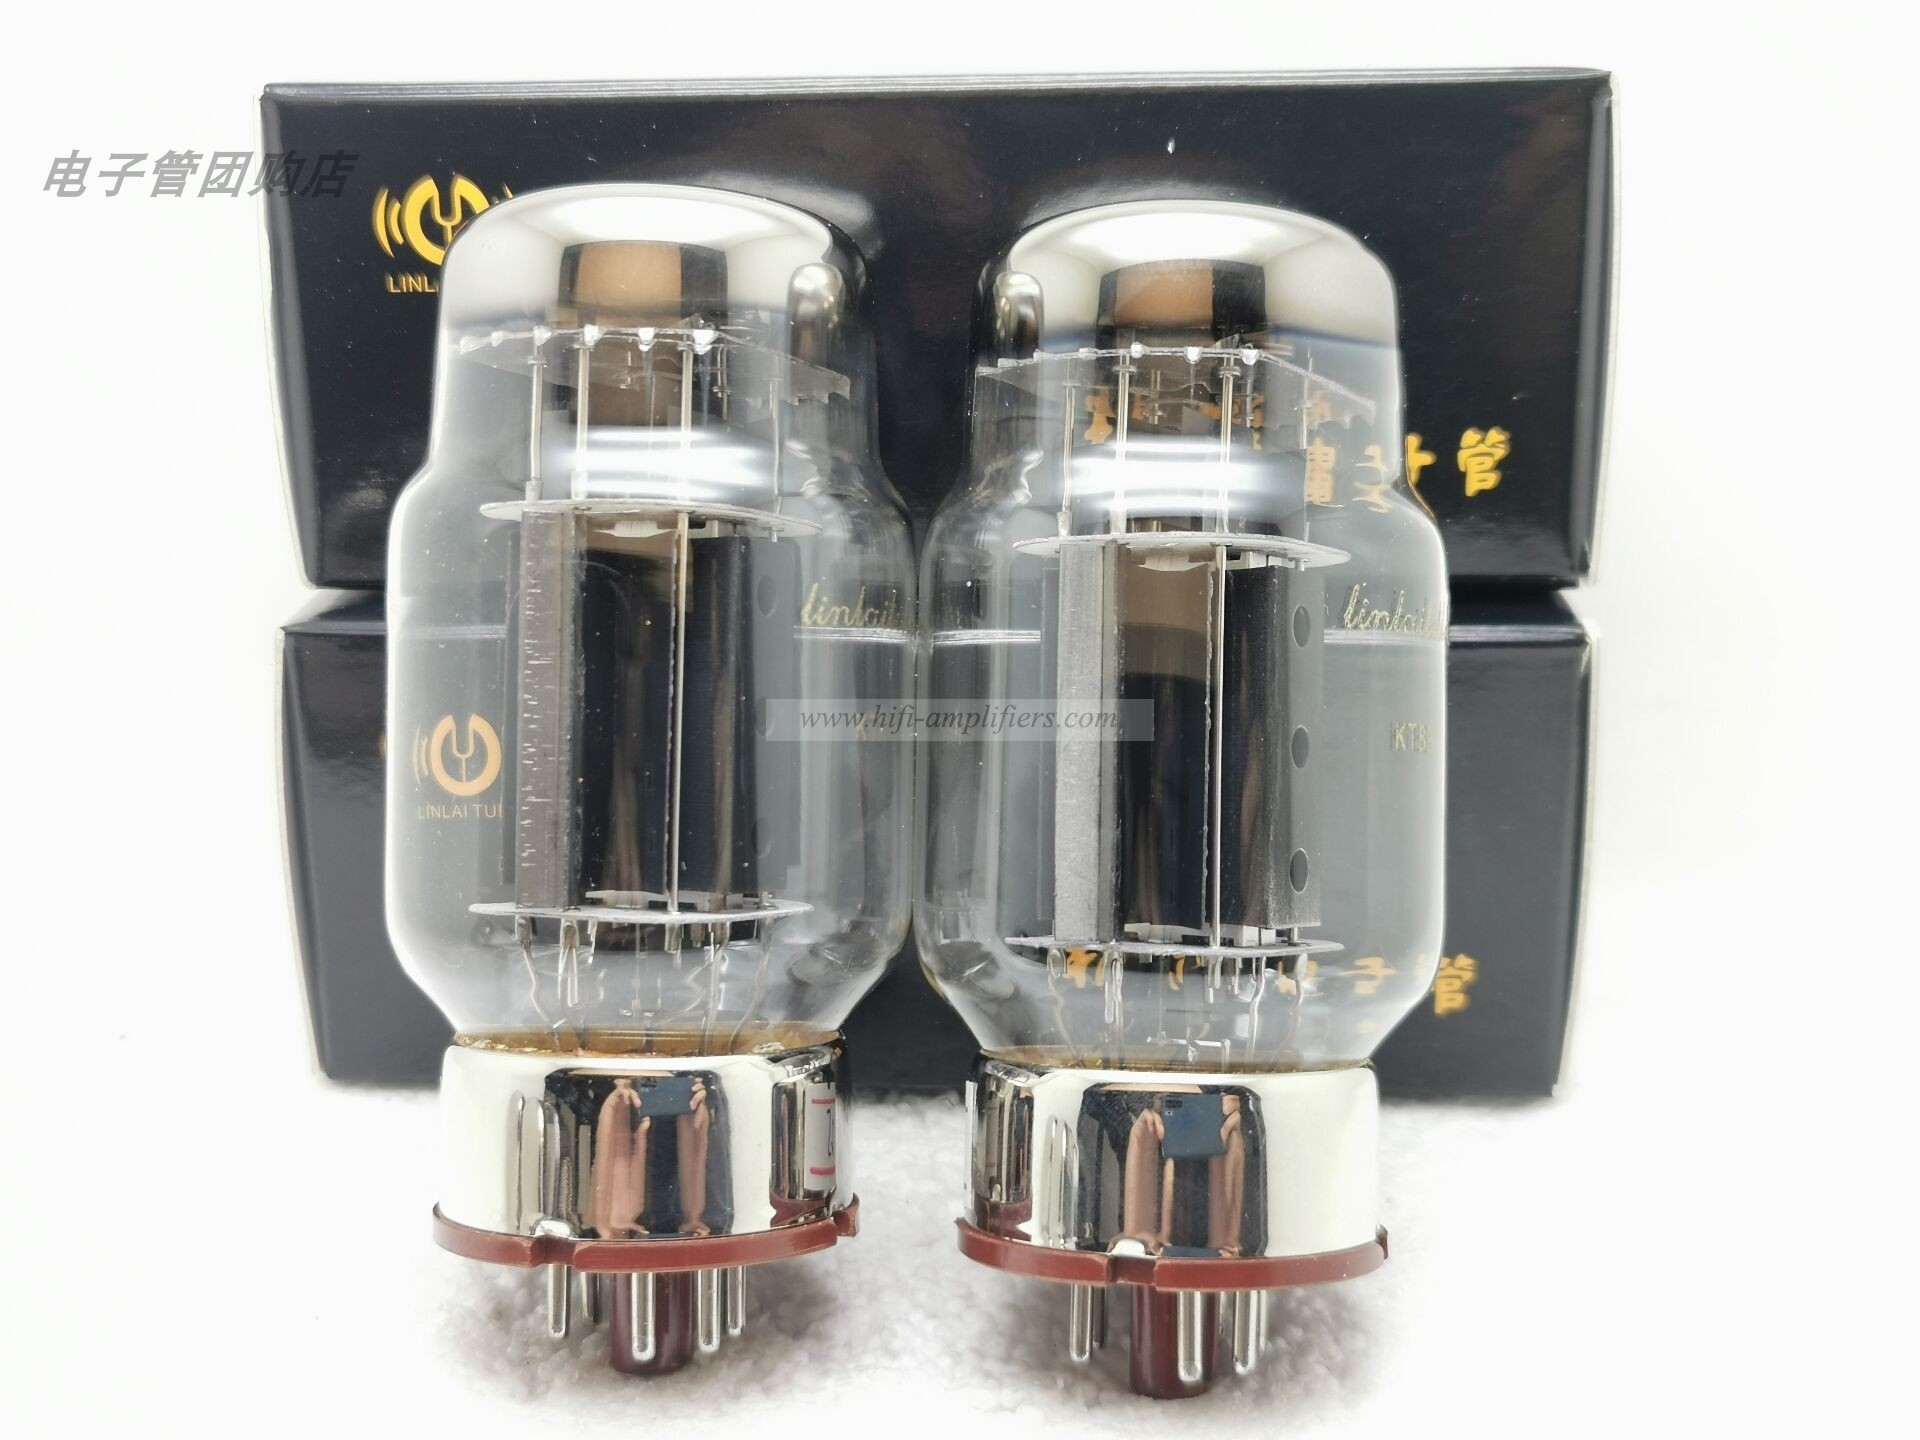 LINLAI KT88 Vakuumröhre ersetzt KT120/KT88-TII/KT100/KT88 HIFI Audio Valve Electronic Tube Matched Pair